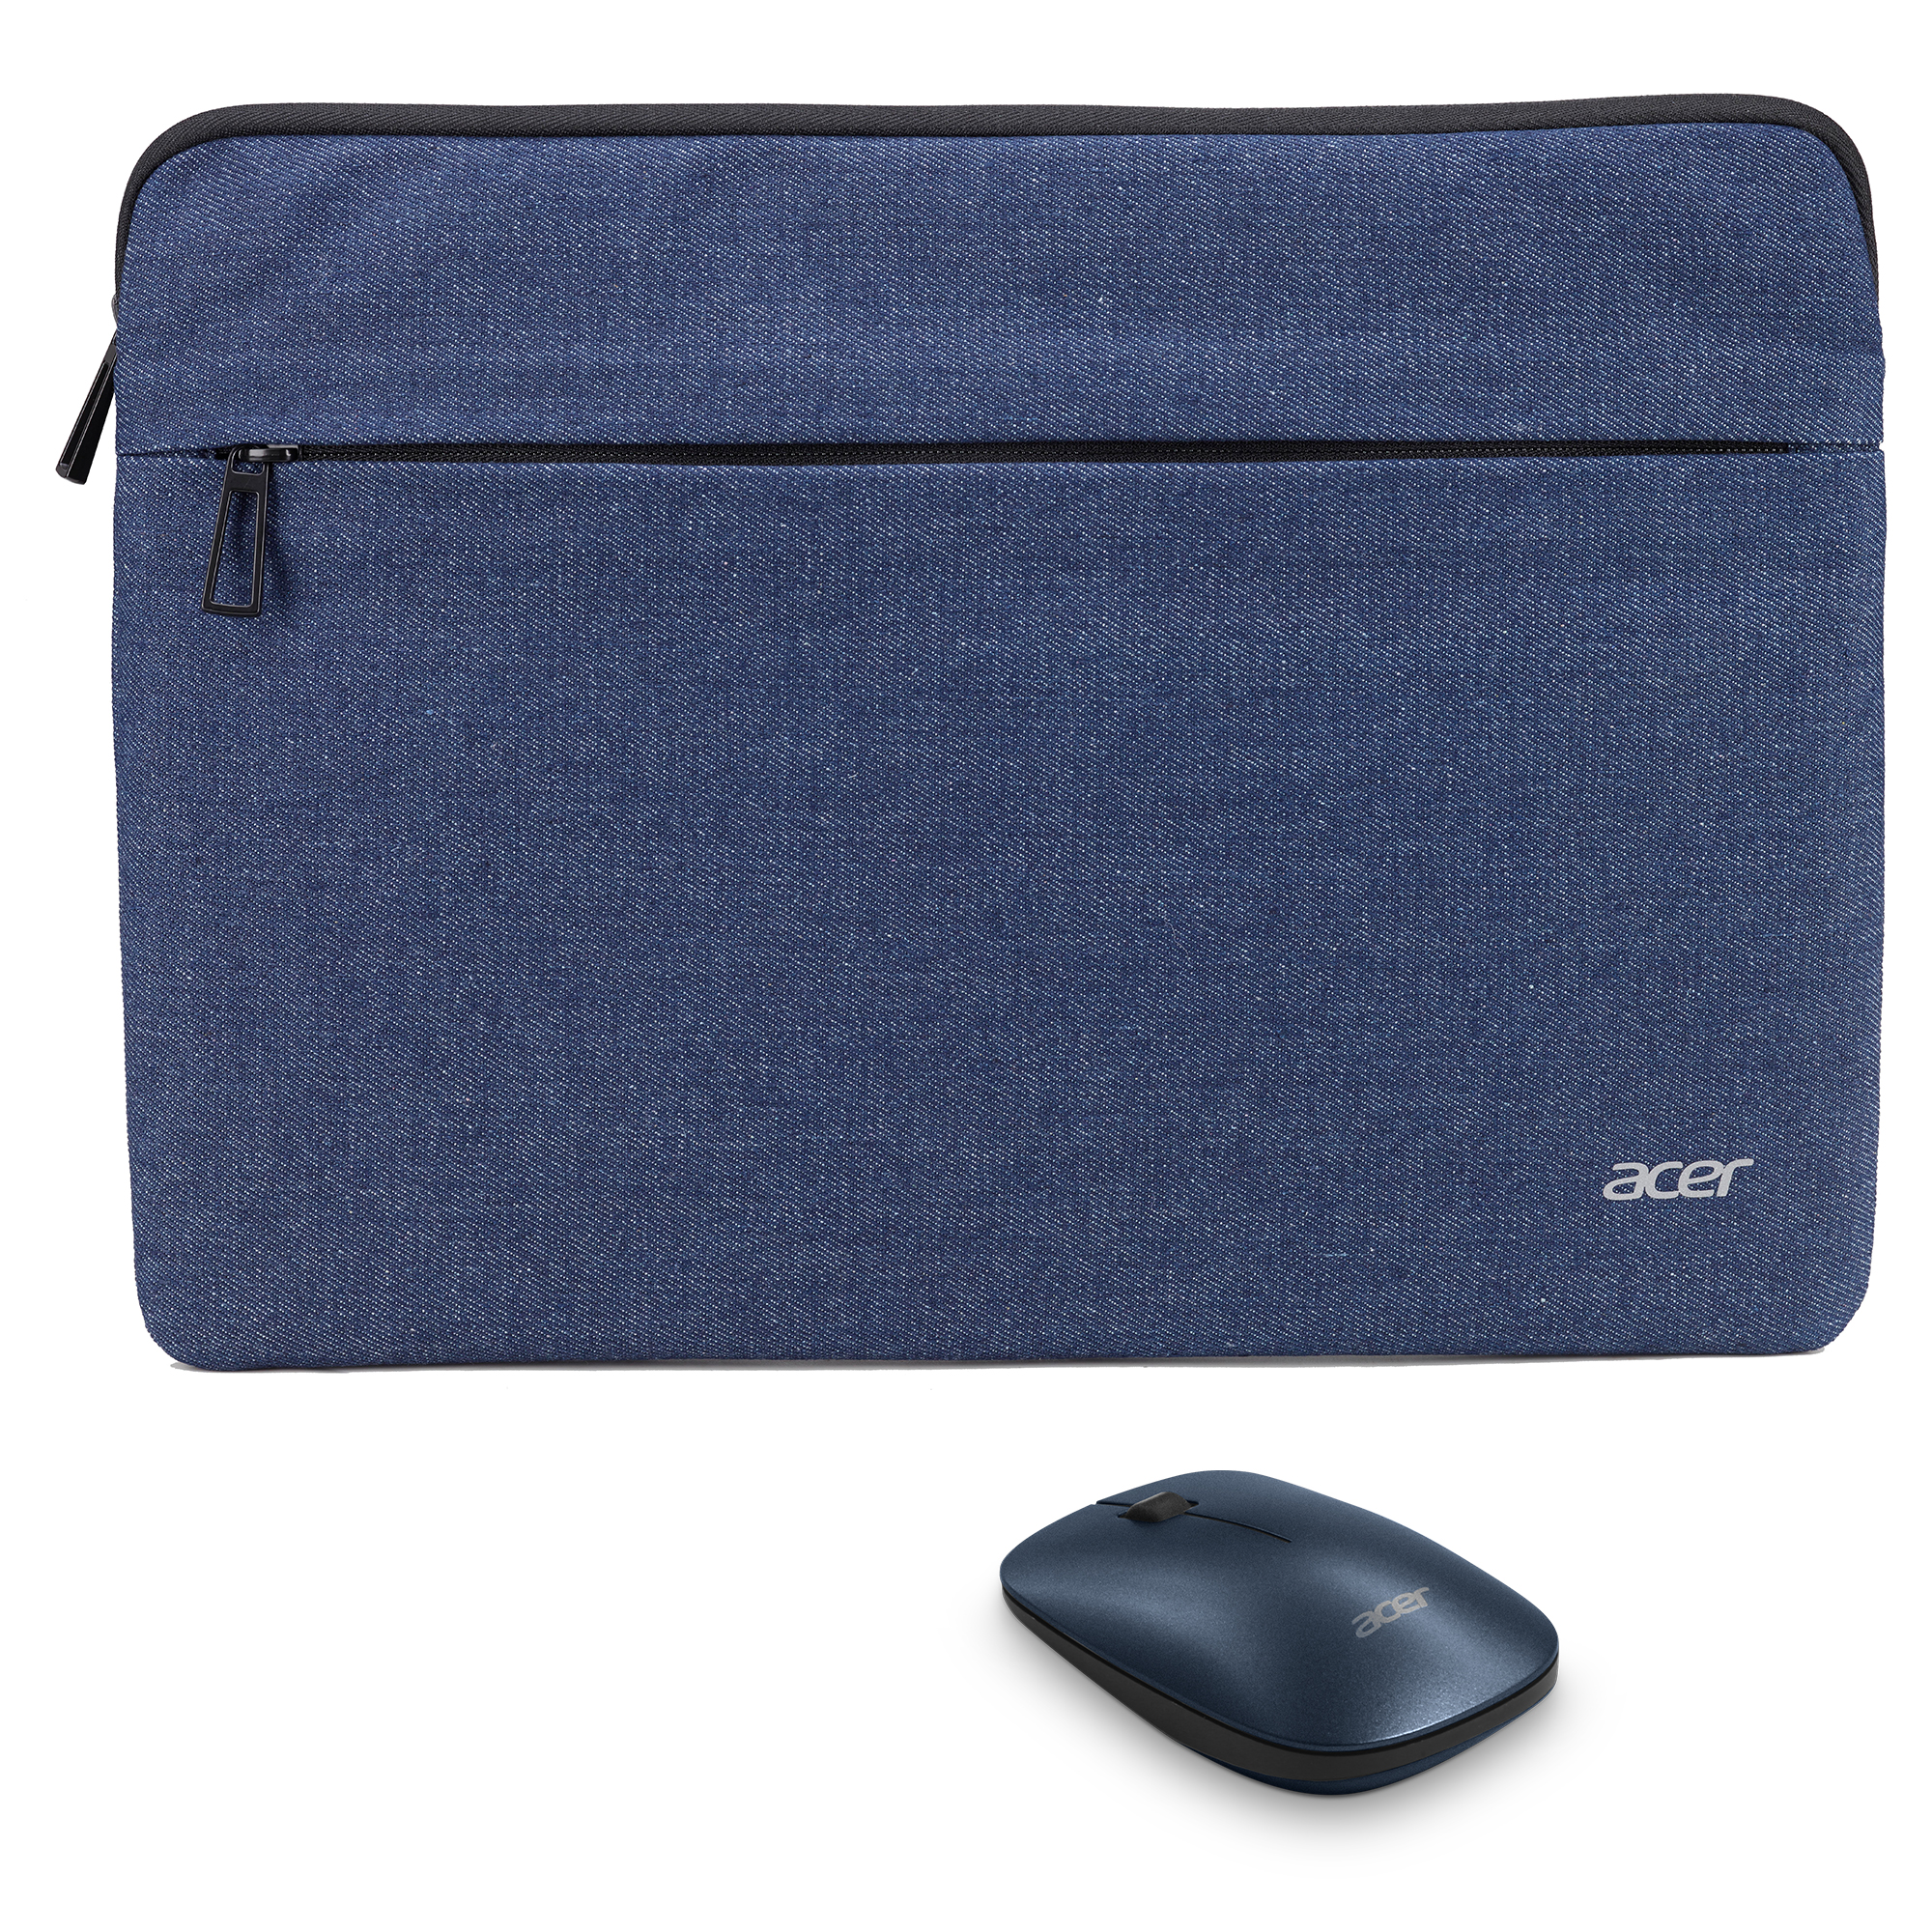 Acer Blue Optical Mouse & 15" Blue Sleeve Bundle - image 1 of 6